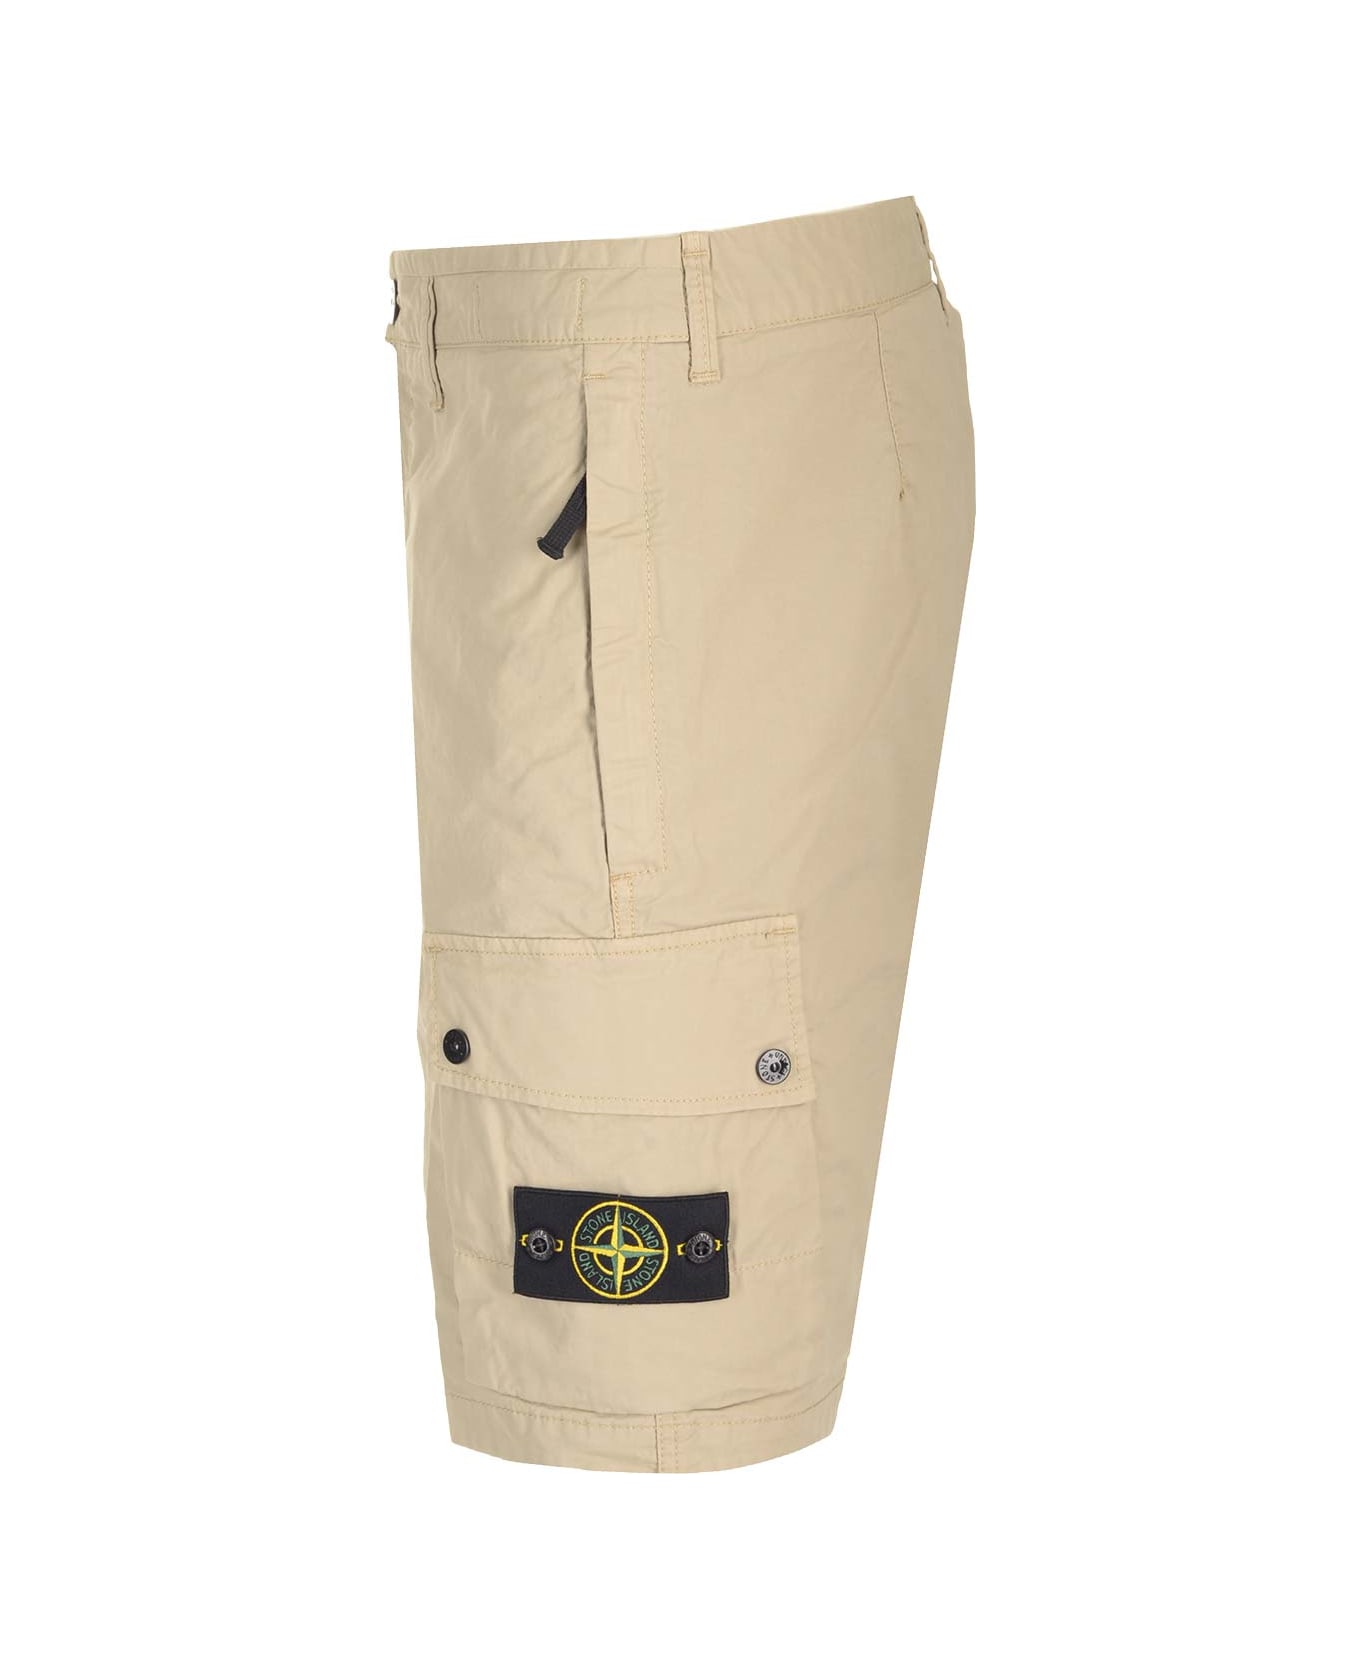 Stone Island Cargo Shorts In Sand-colored Stretch Supima Cotton - Beige